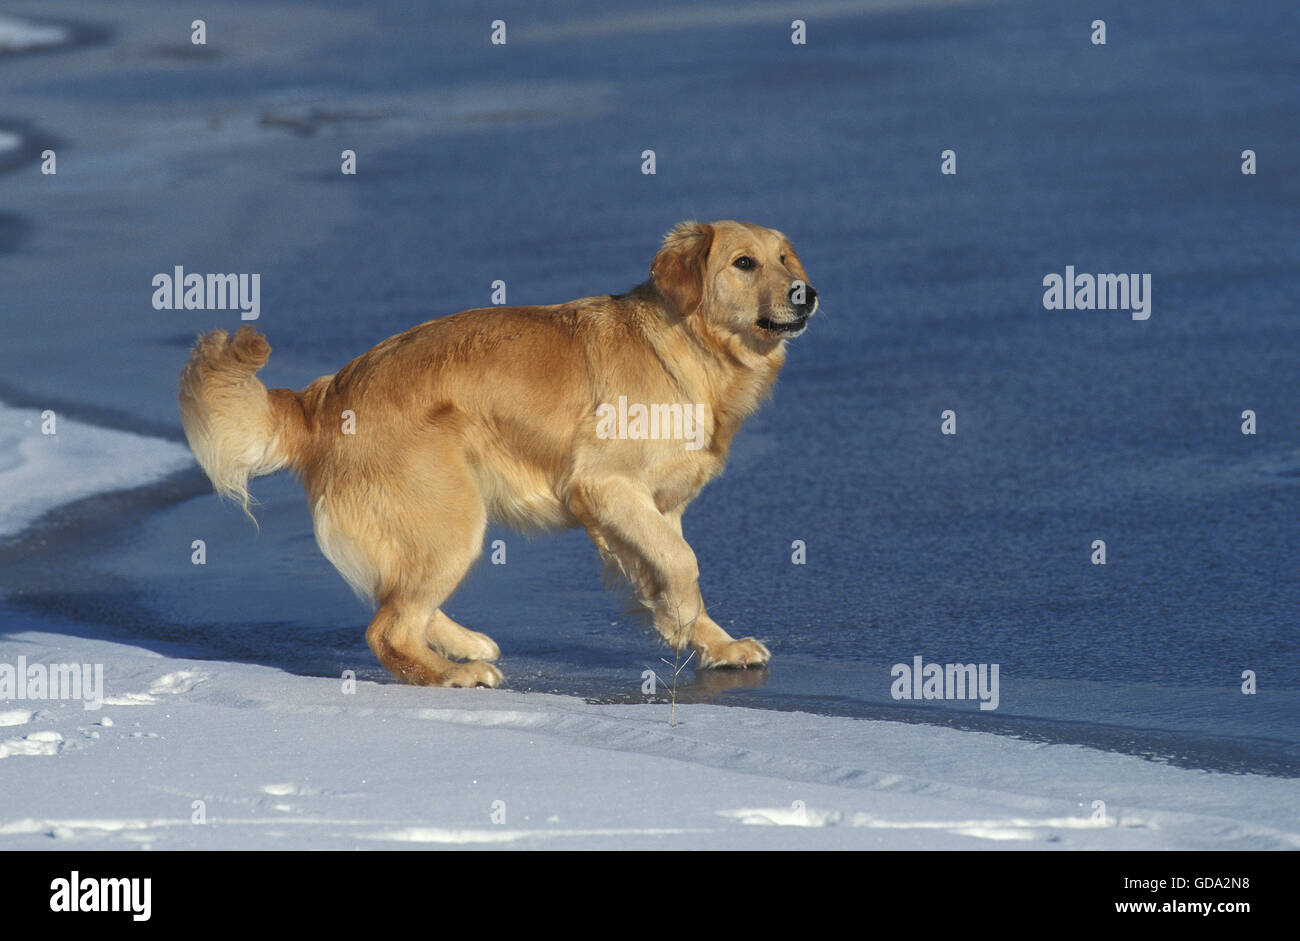 Golden Retriever, Dog on Snow Stock Photo